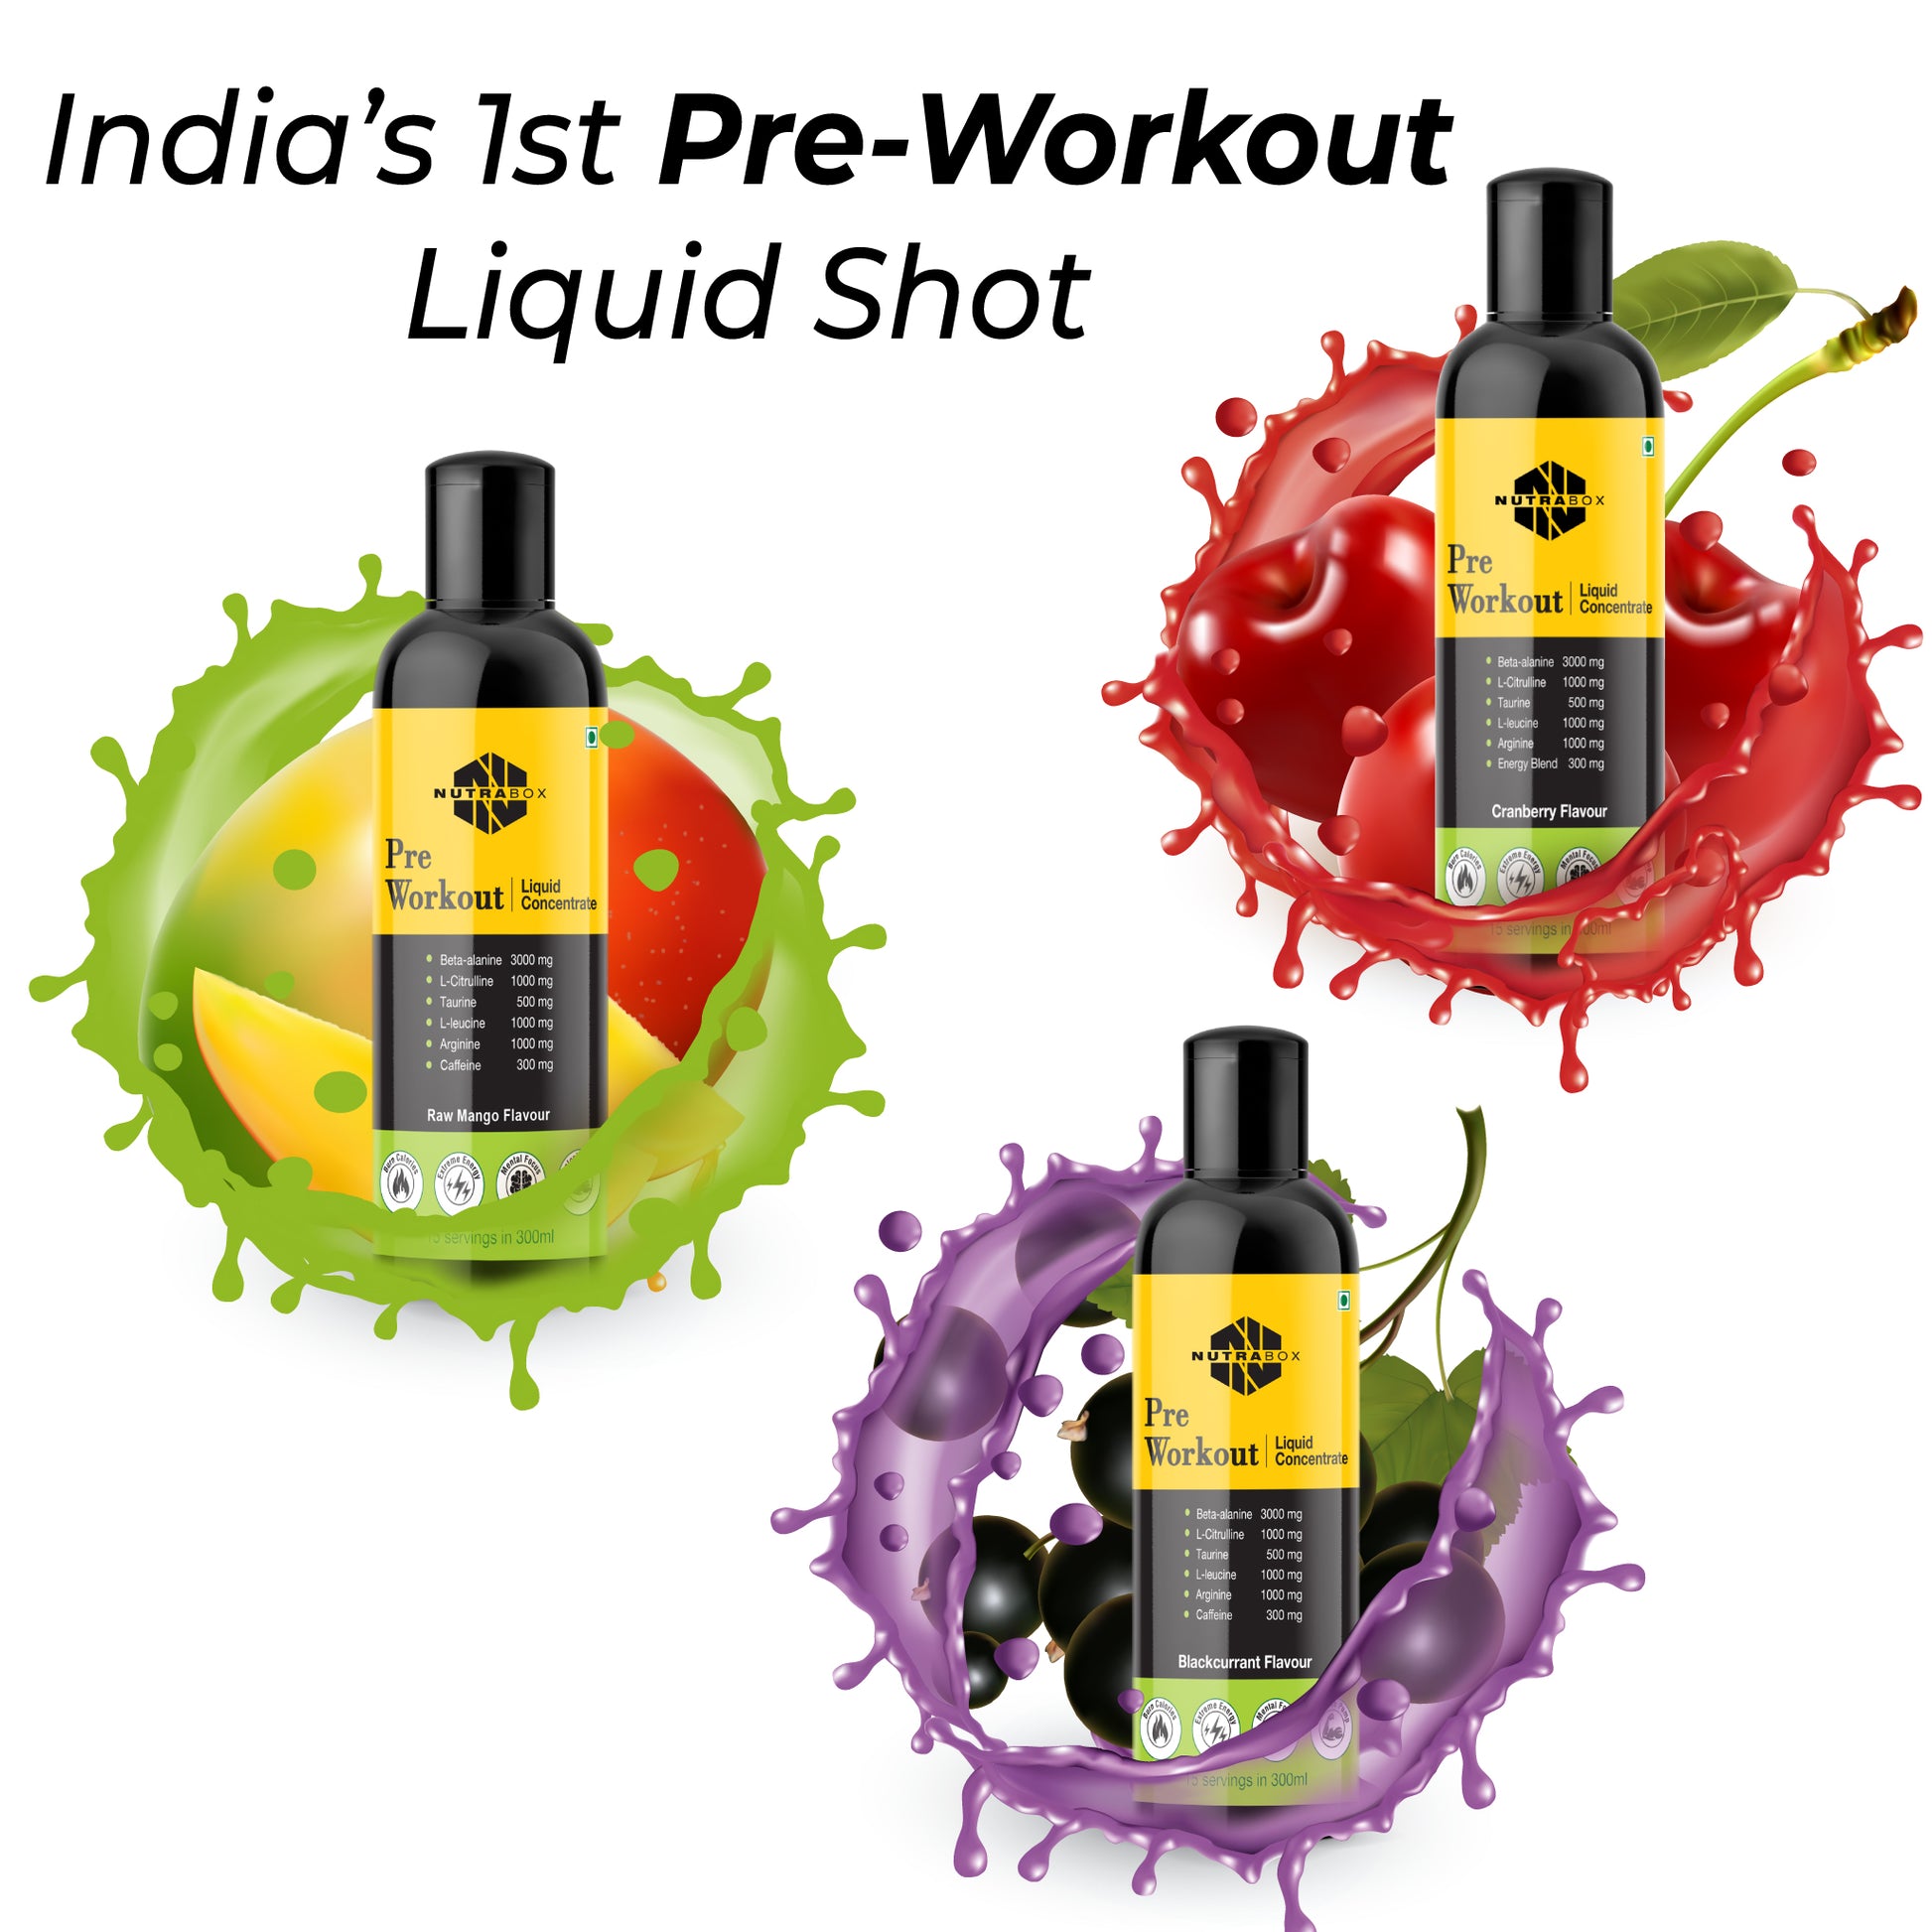 Pre-Workout Liquid Shots - Nutrabox India